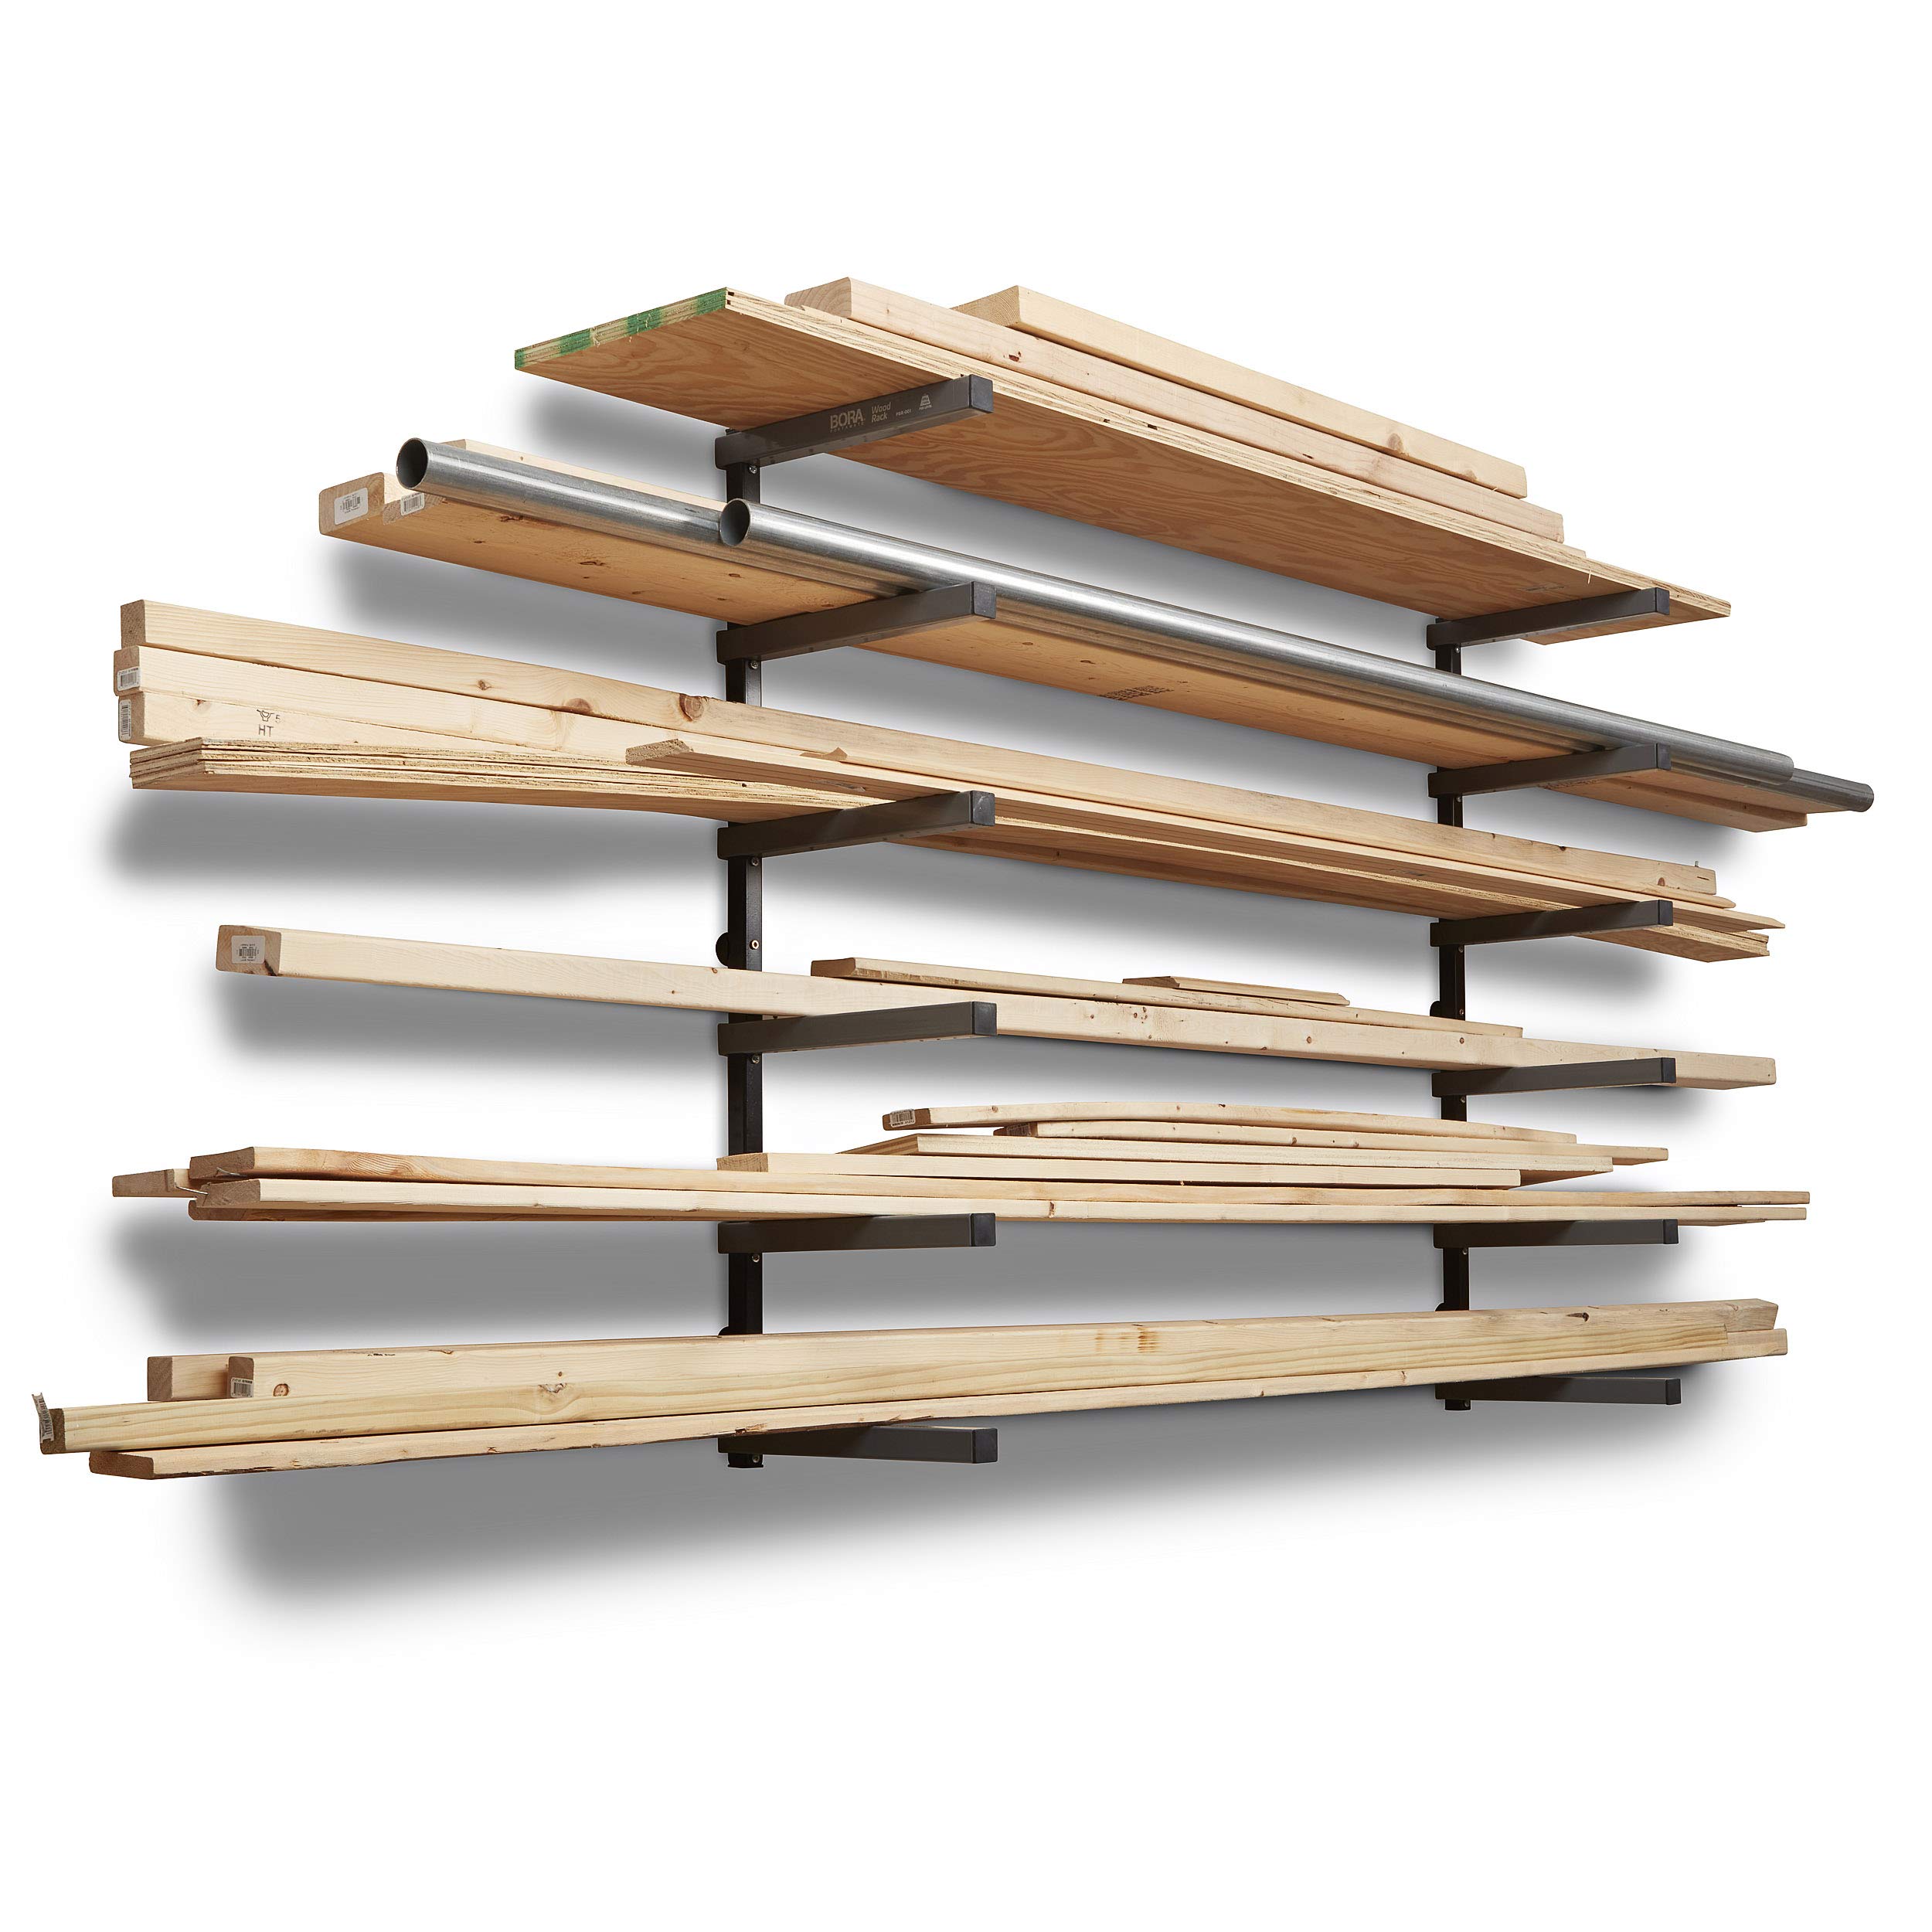 Bora 6-Shelf Wood Storage Organizer Rack (Black/Grey, PBR-006B) $34.97 + Free Shipping w/ Prime or on $35+